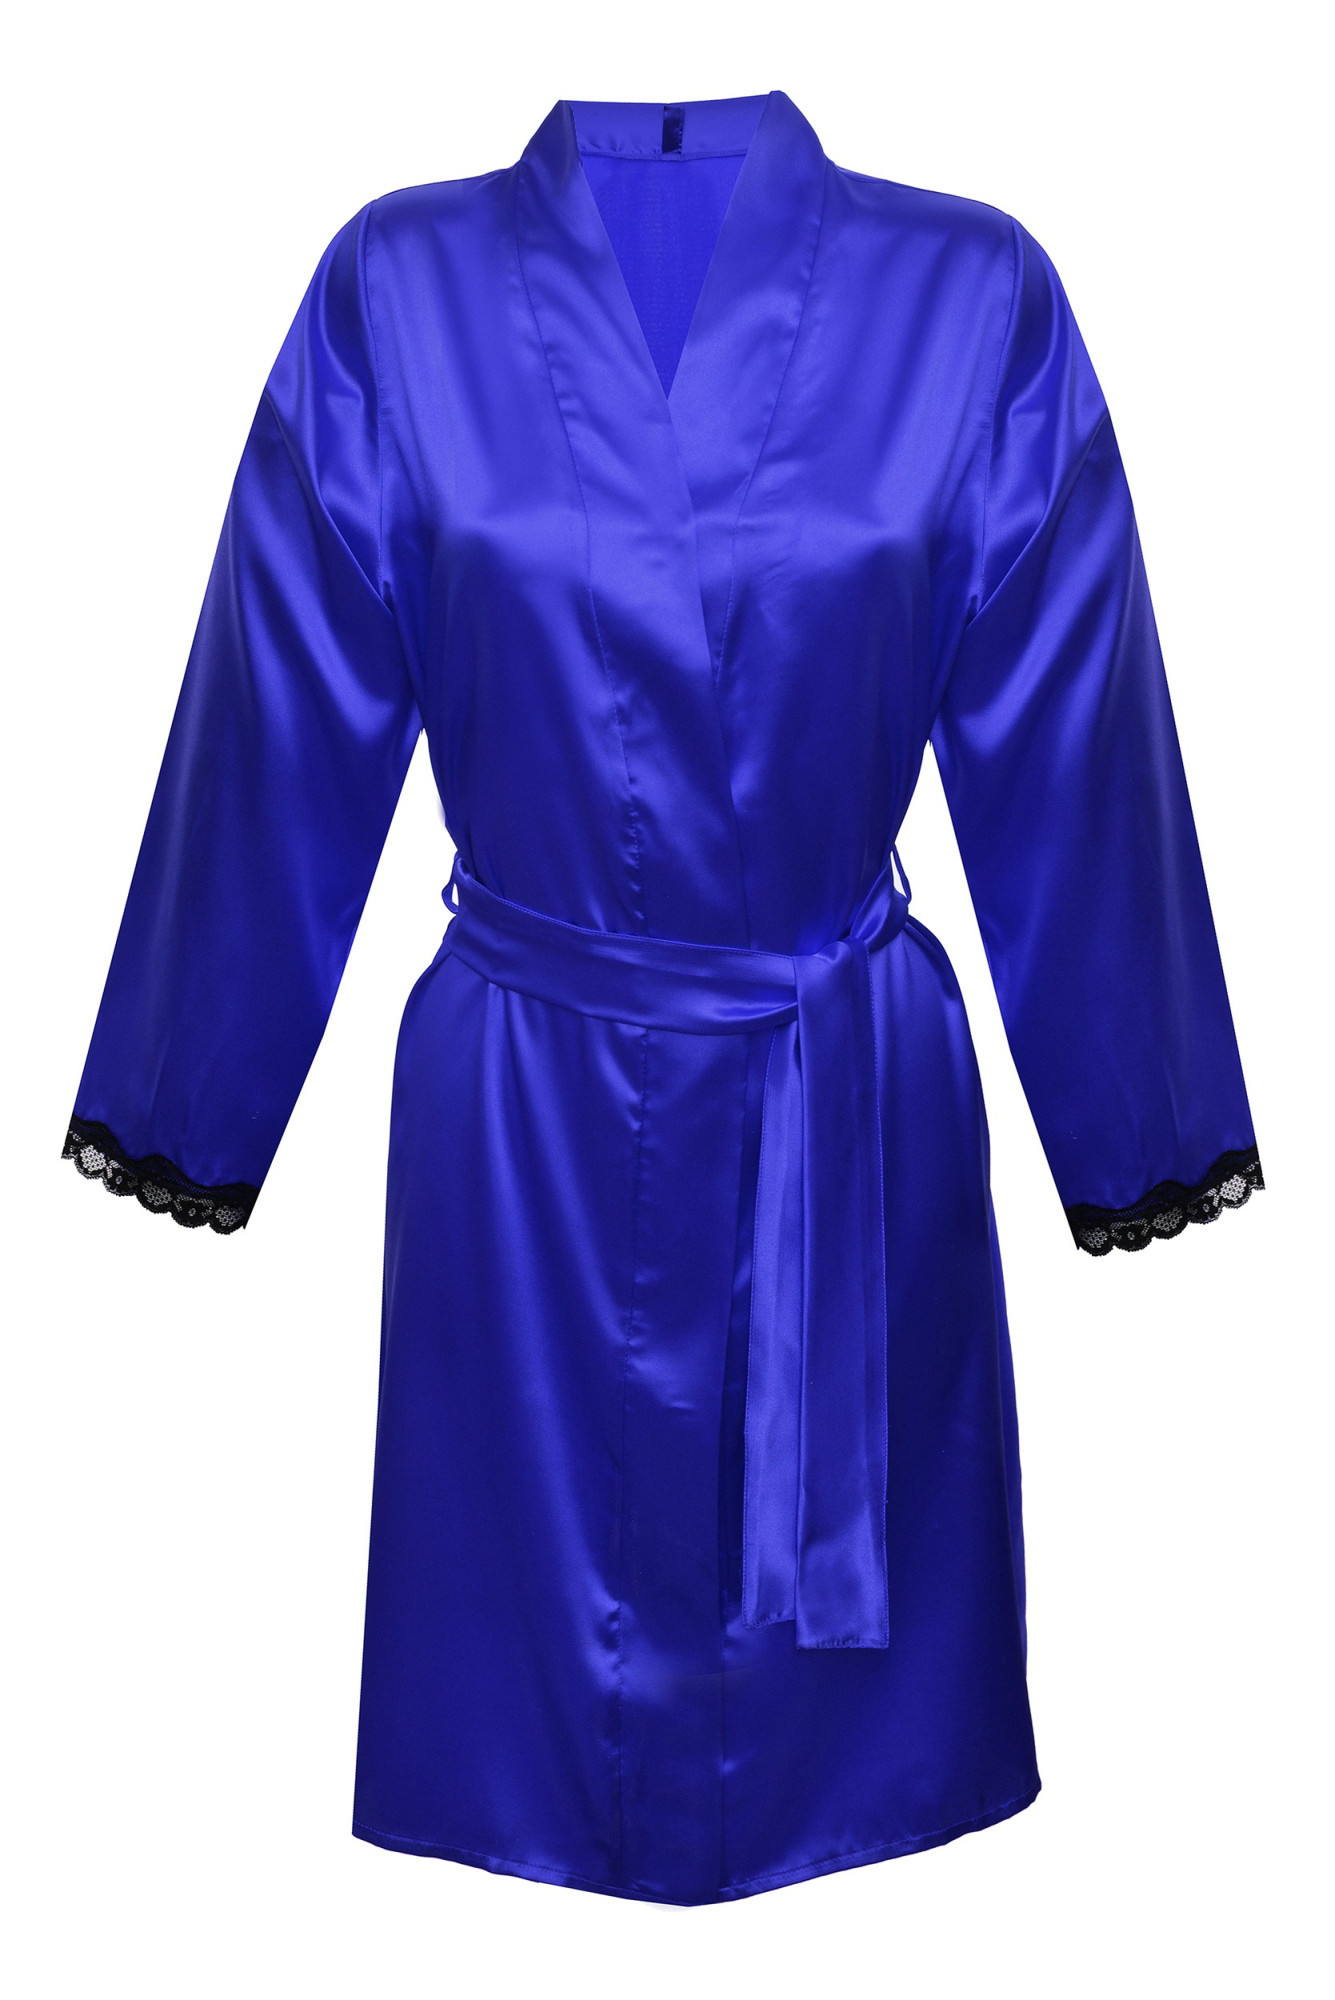 DKaren Housecoat Nancy Blue XL Modrá